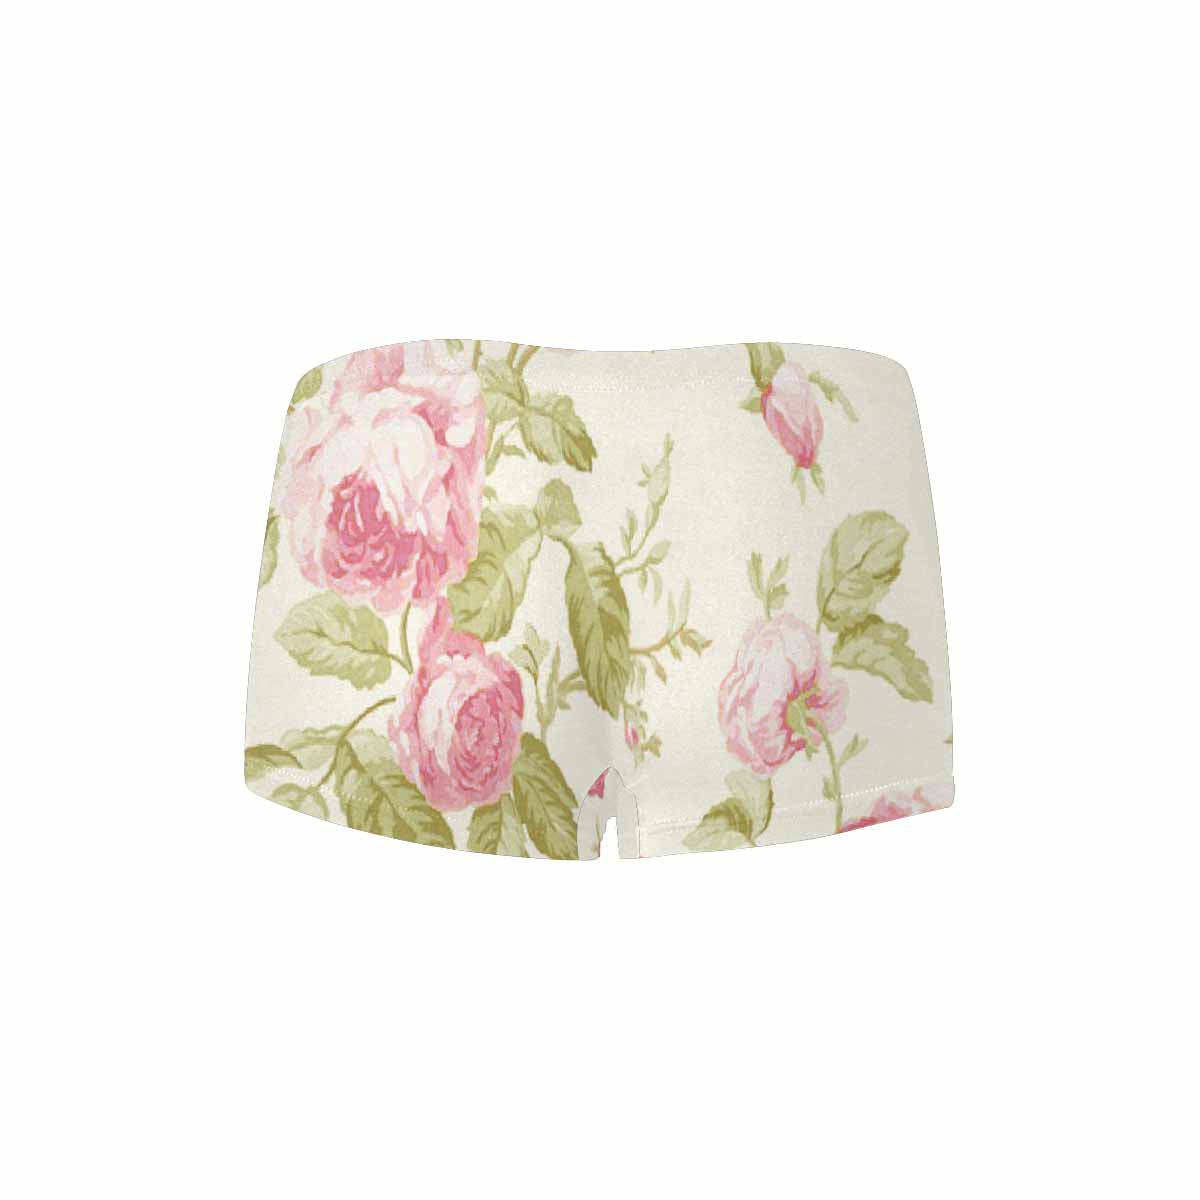 Floral 2, boyshorts, daisy dukes, pum pum shorts, panties, design 13